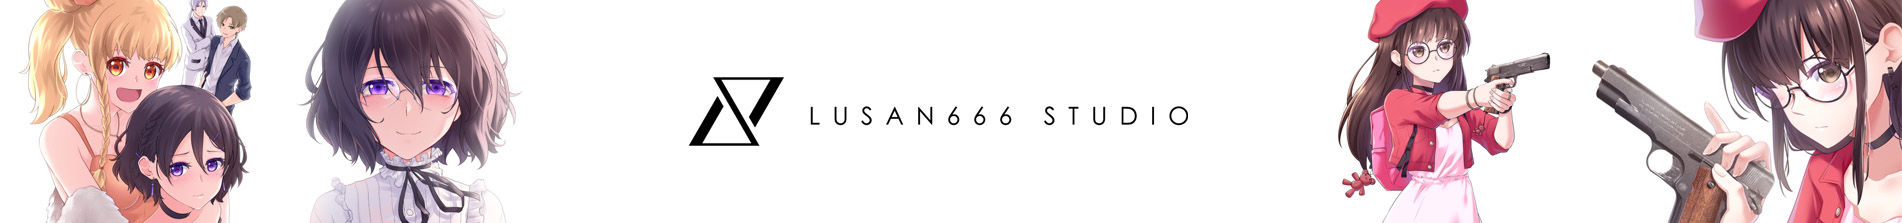 Lusan666 banner